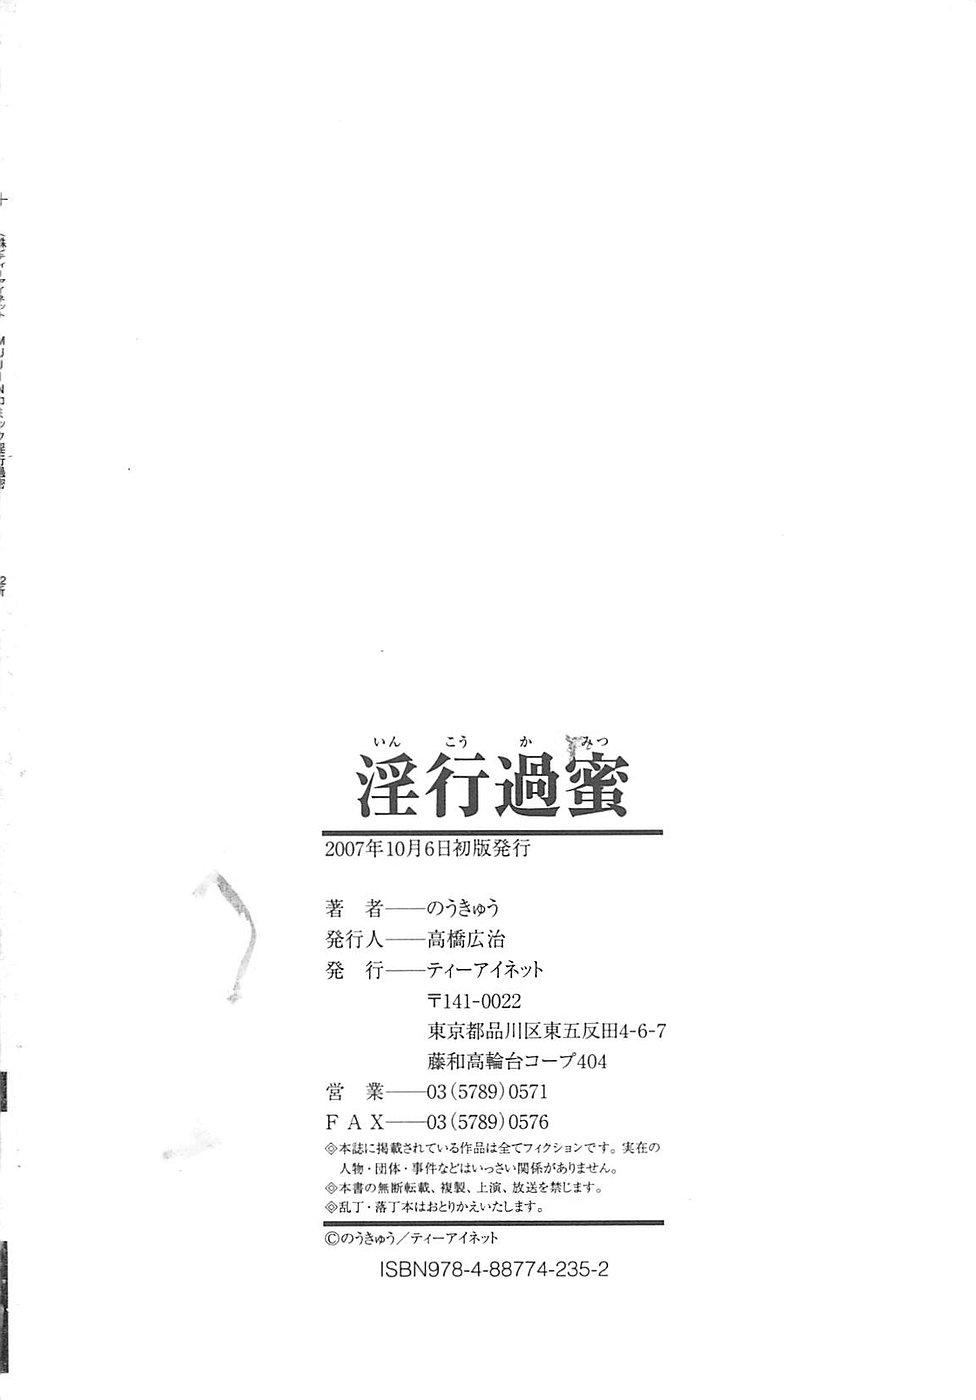 Inkoukamitsu 199